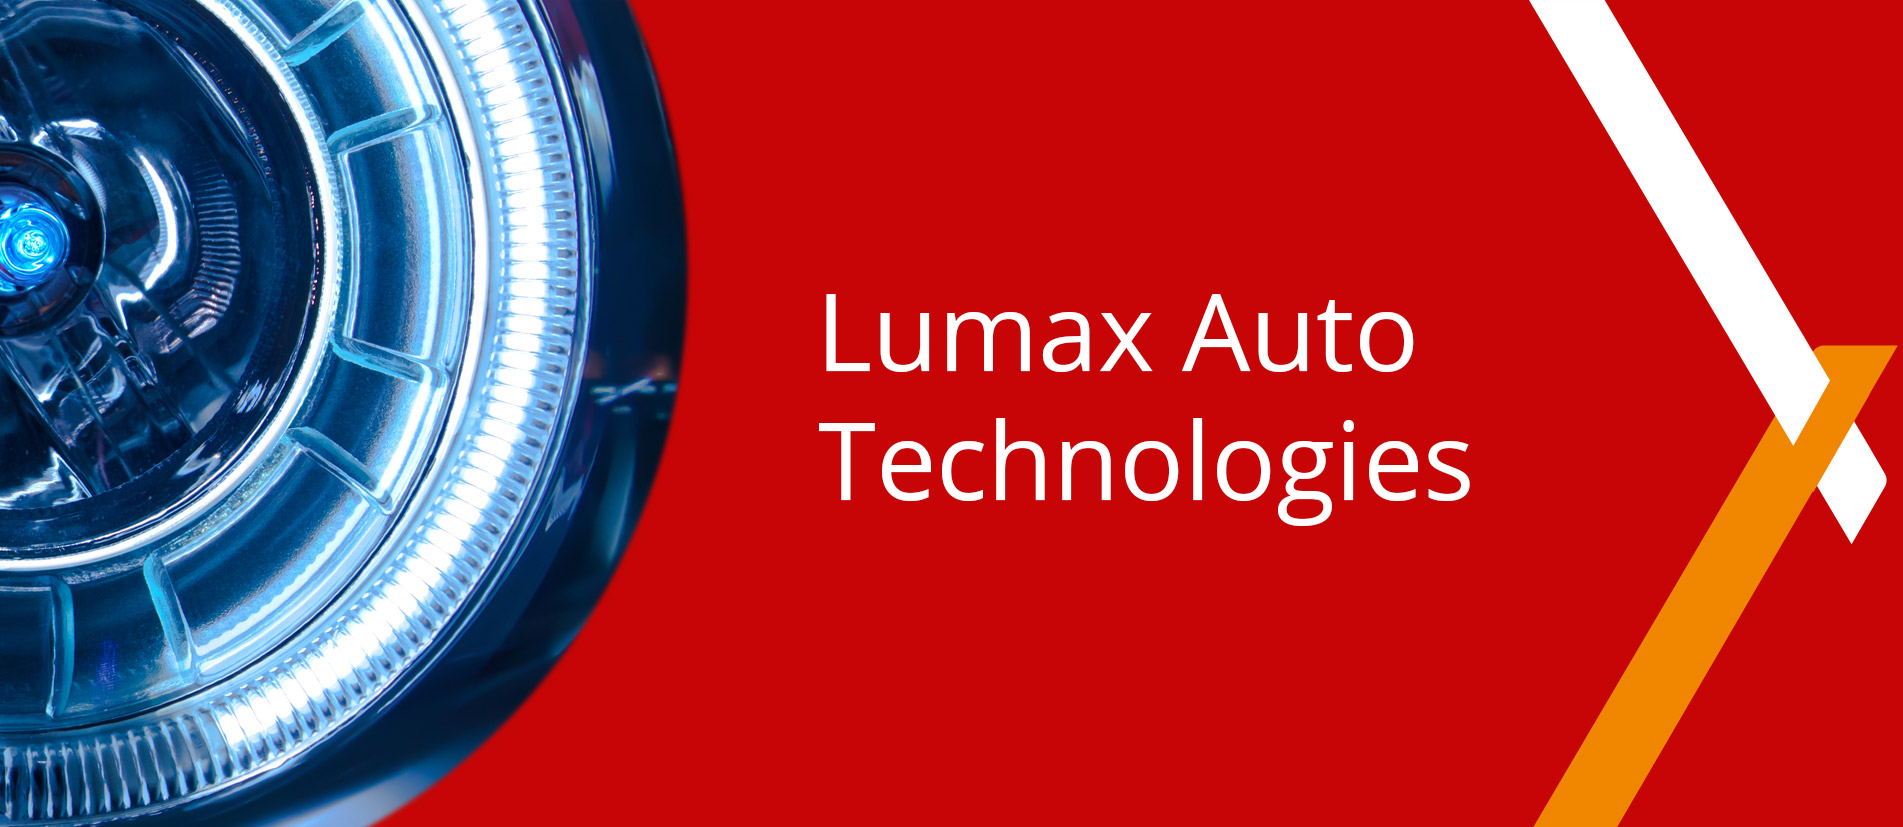 lumax-mobile-banner